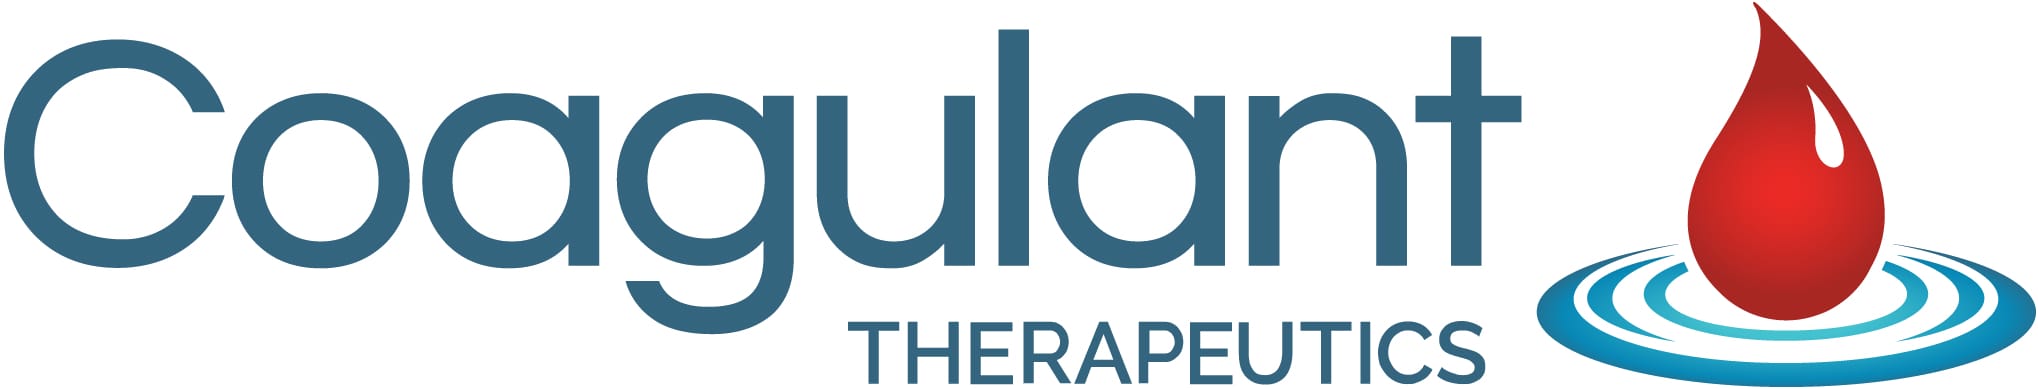 Coagulant Therapeutics Logo